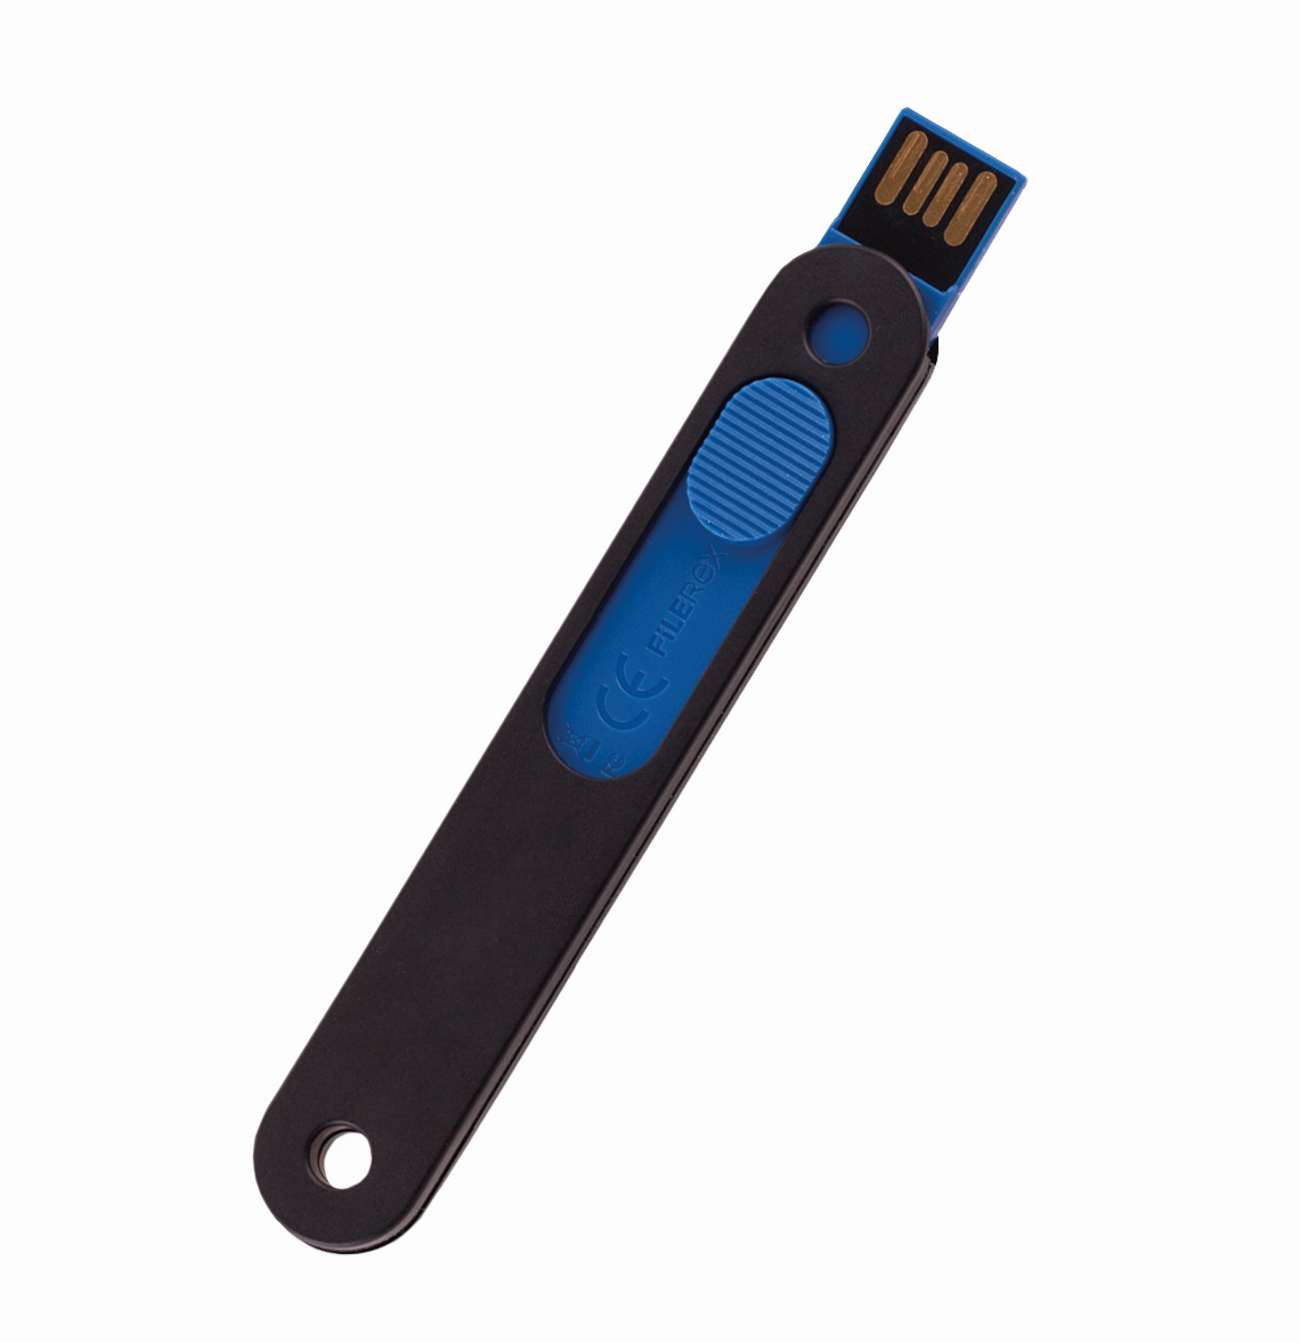 FILEREX FiLEREX / Sky Original - Blue, - 32GB BlackE USB-Stick GB) Blue) 2.0 (Sky #GEN2 32 (Black